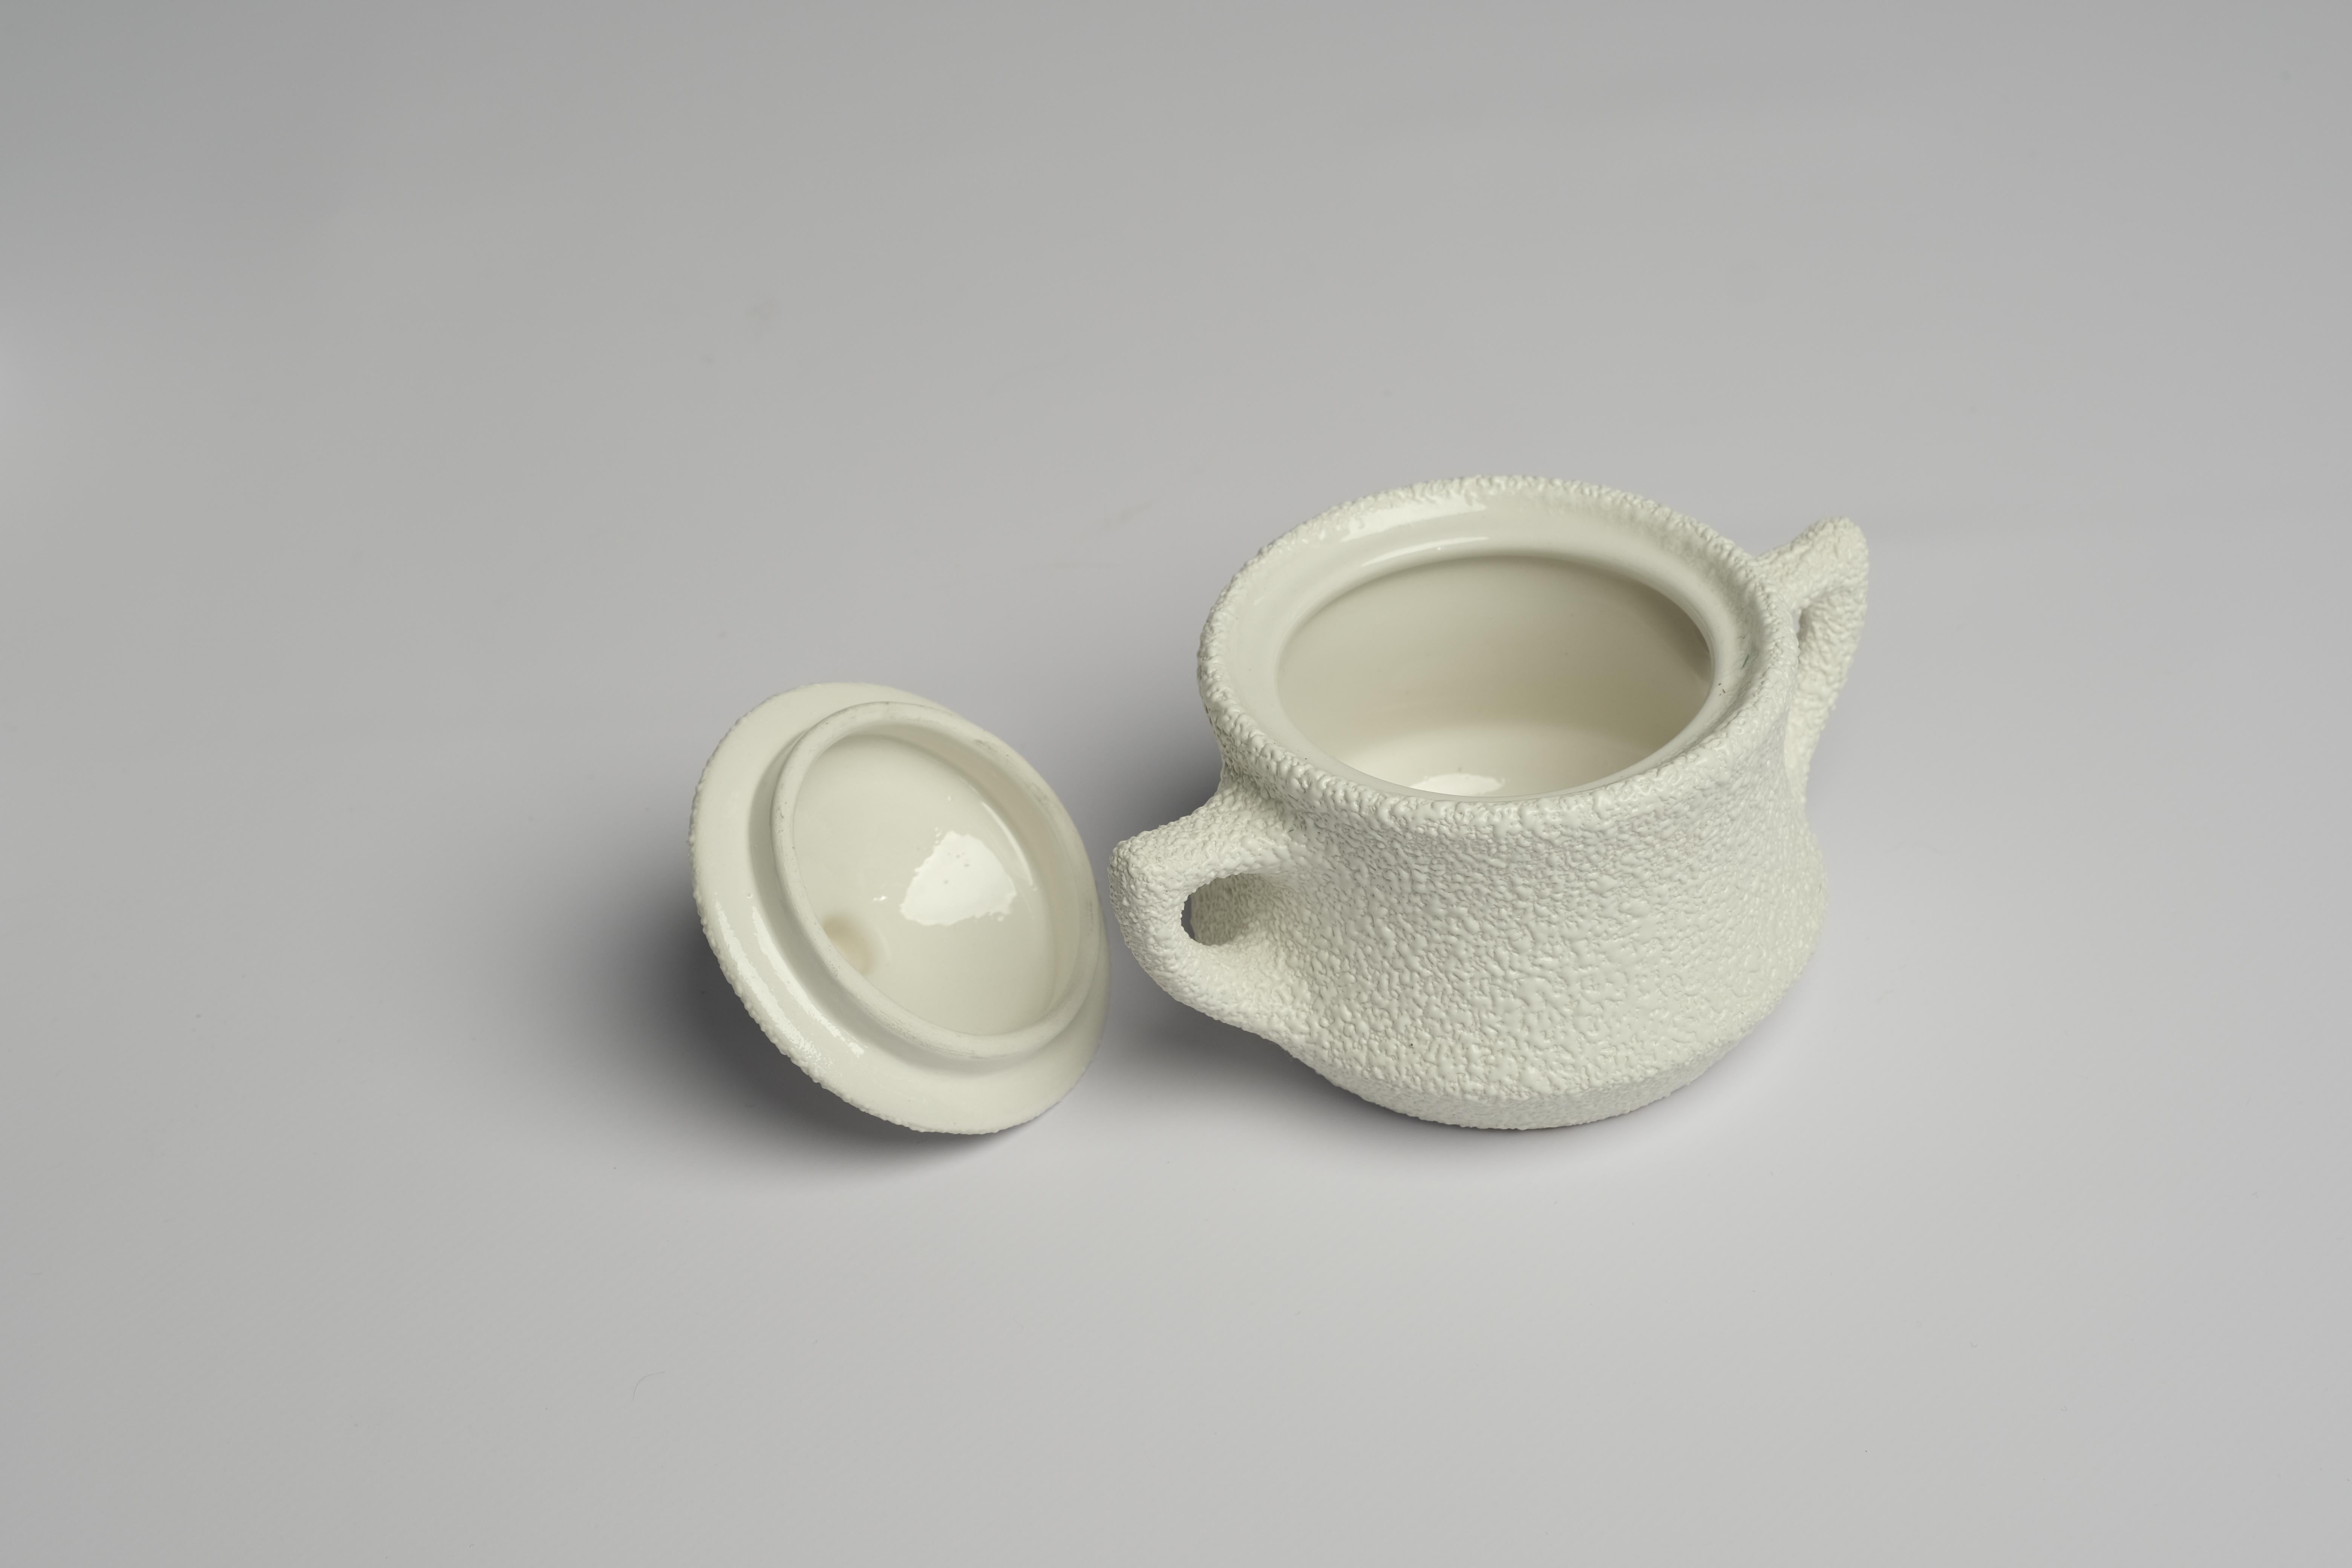 Glazed Modern Ceramic Coffee/Tea Set in Sand Textured Stucco Finish For Sale